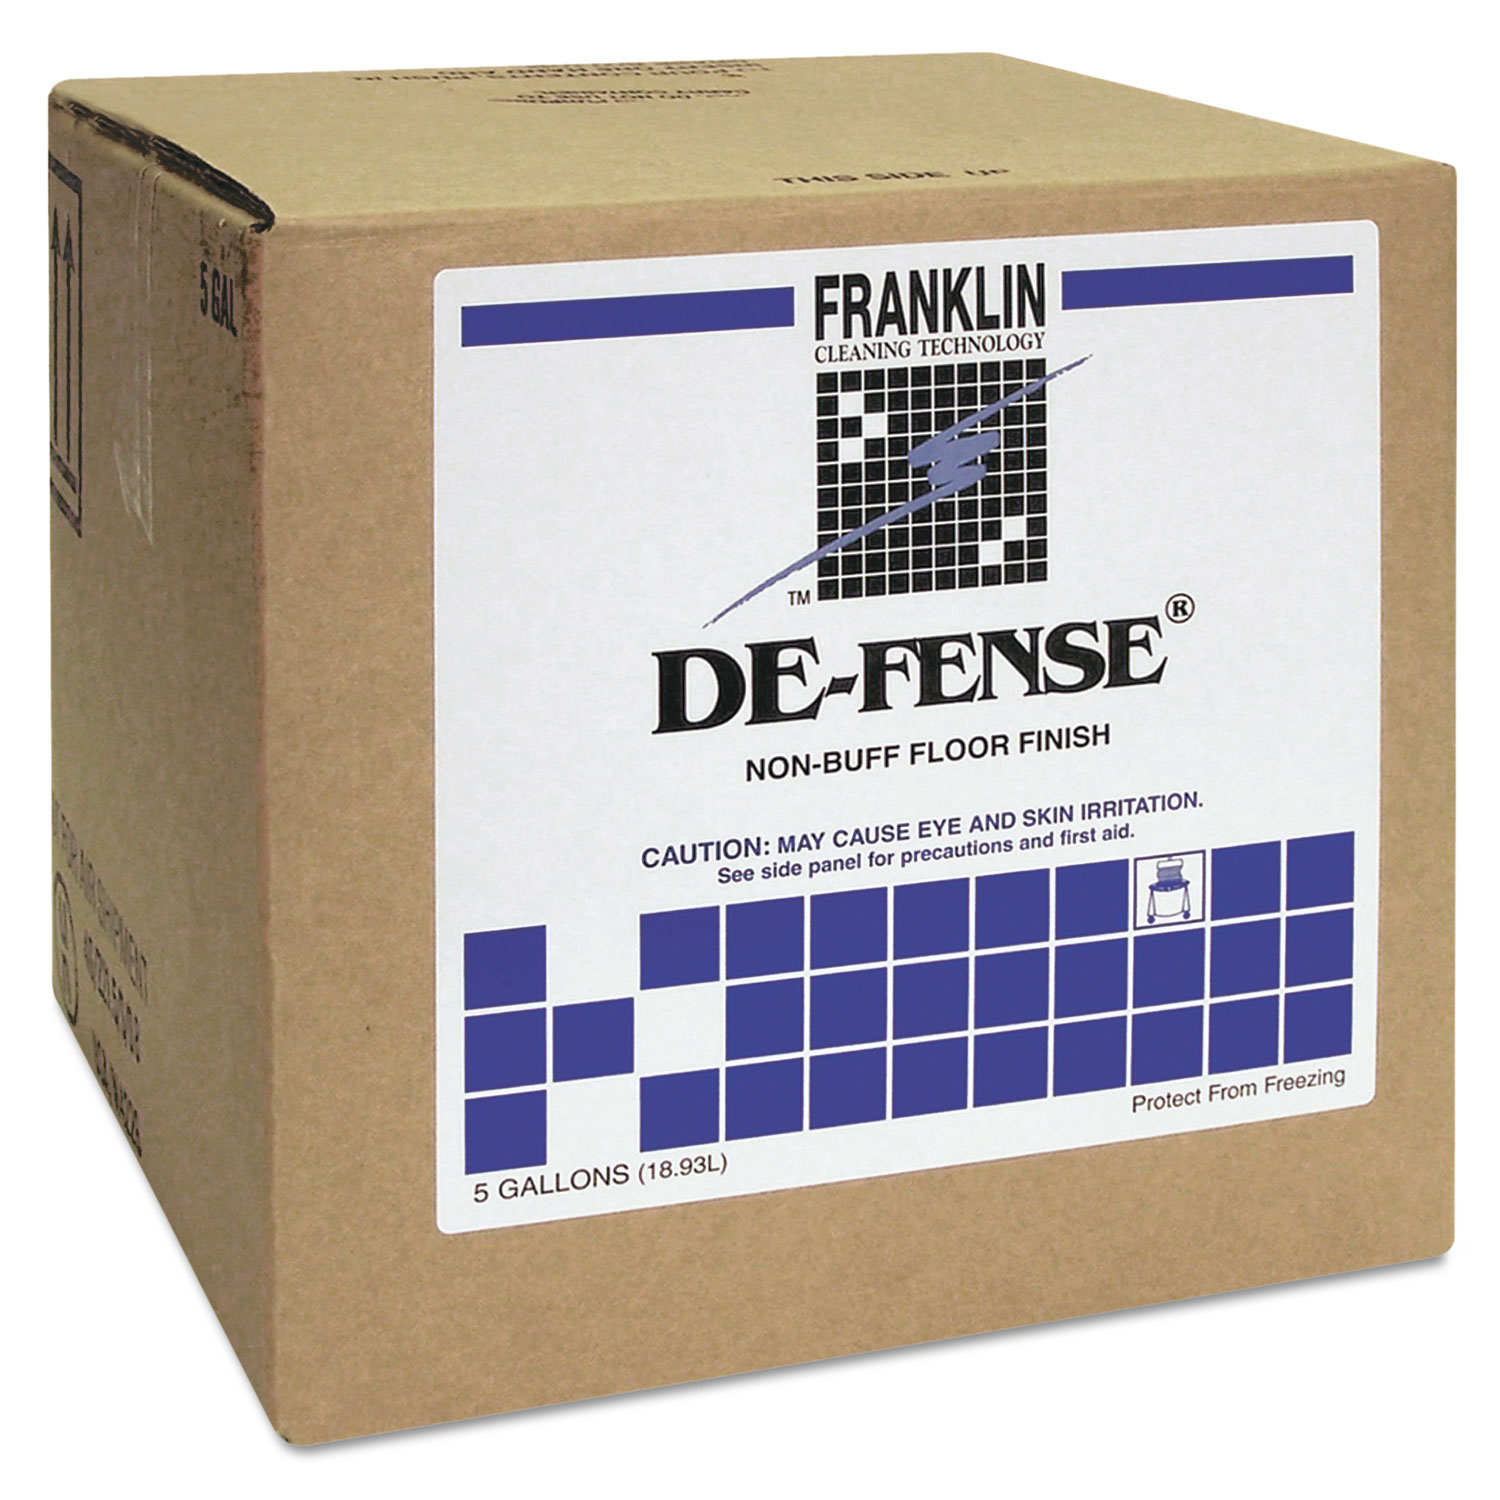 Franklin Cleaning Technology® DE-FENSE Non-Buff Floor Finish, Liquid, 5 gal. Box